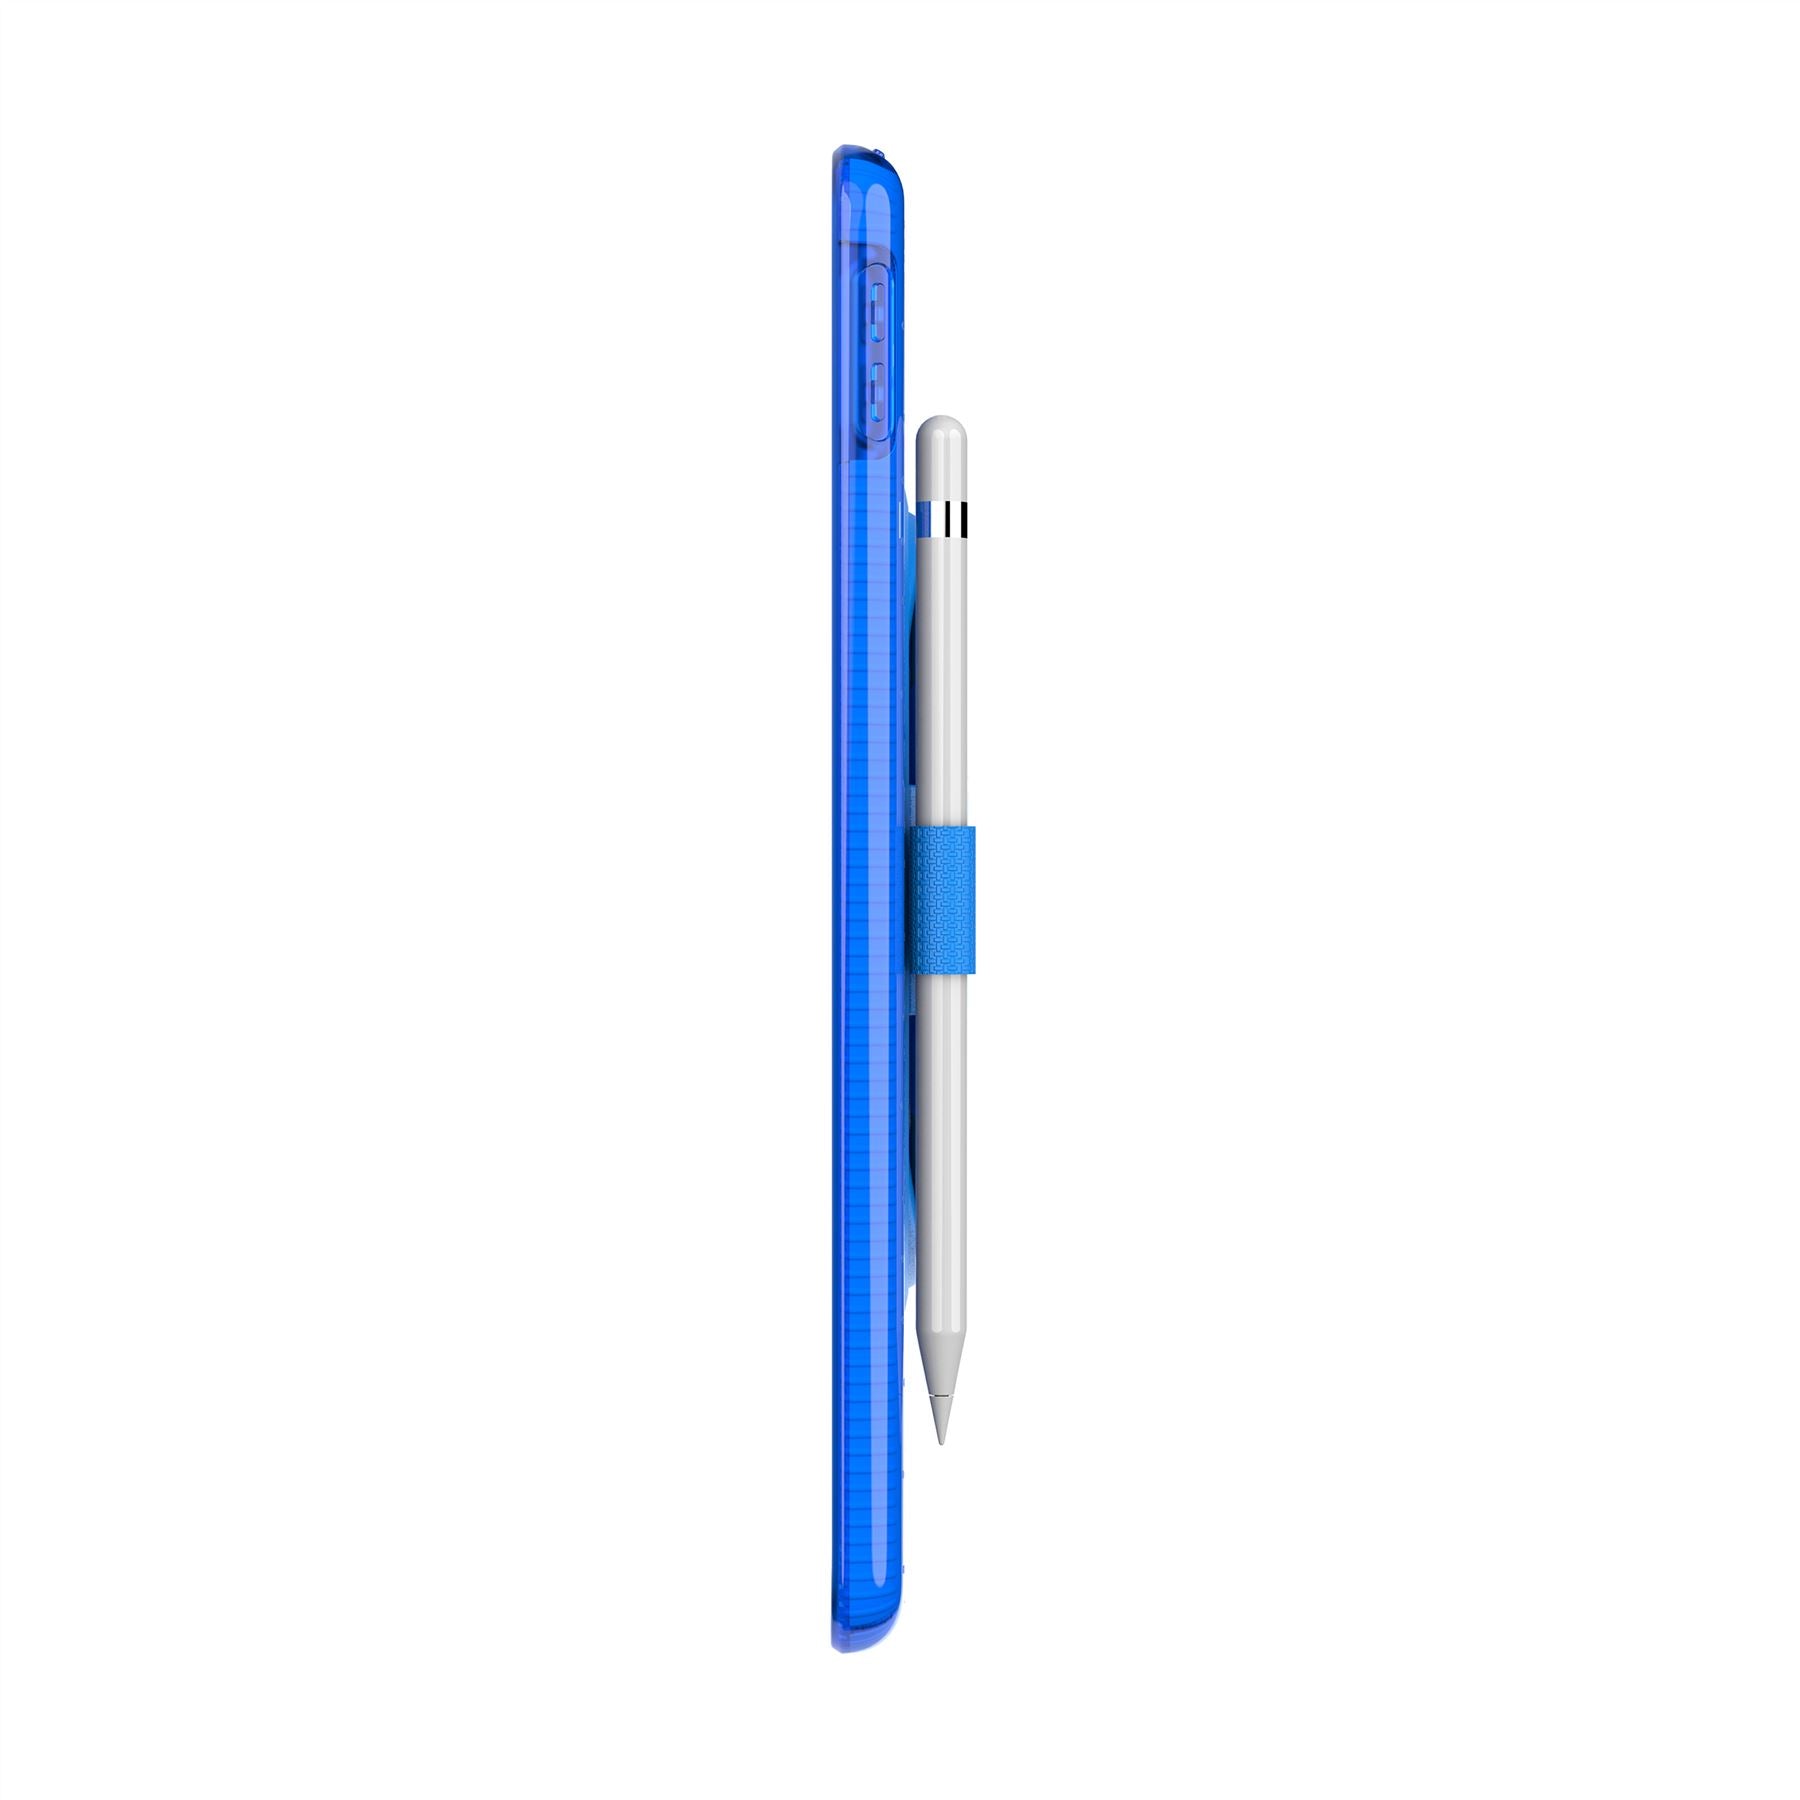 Evo Play2 with Pencil Holder - Apple iPad 7th/8th Gen Case - Blue